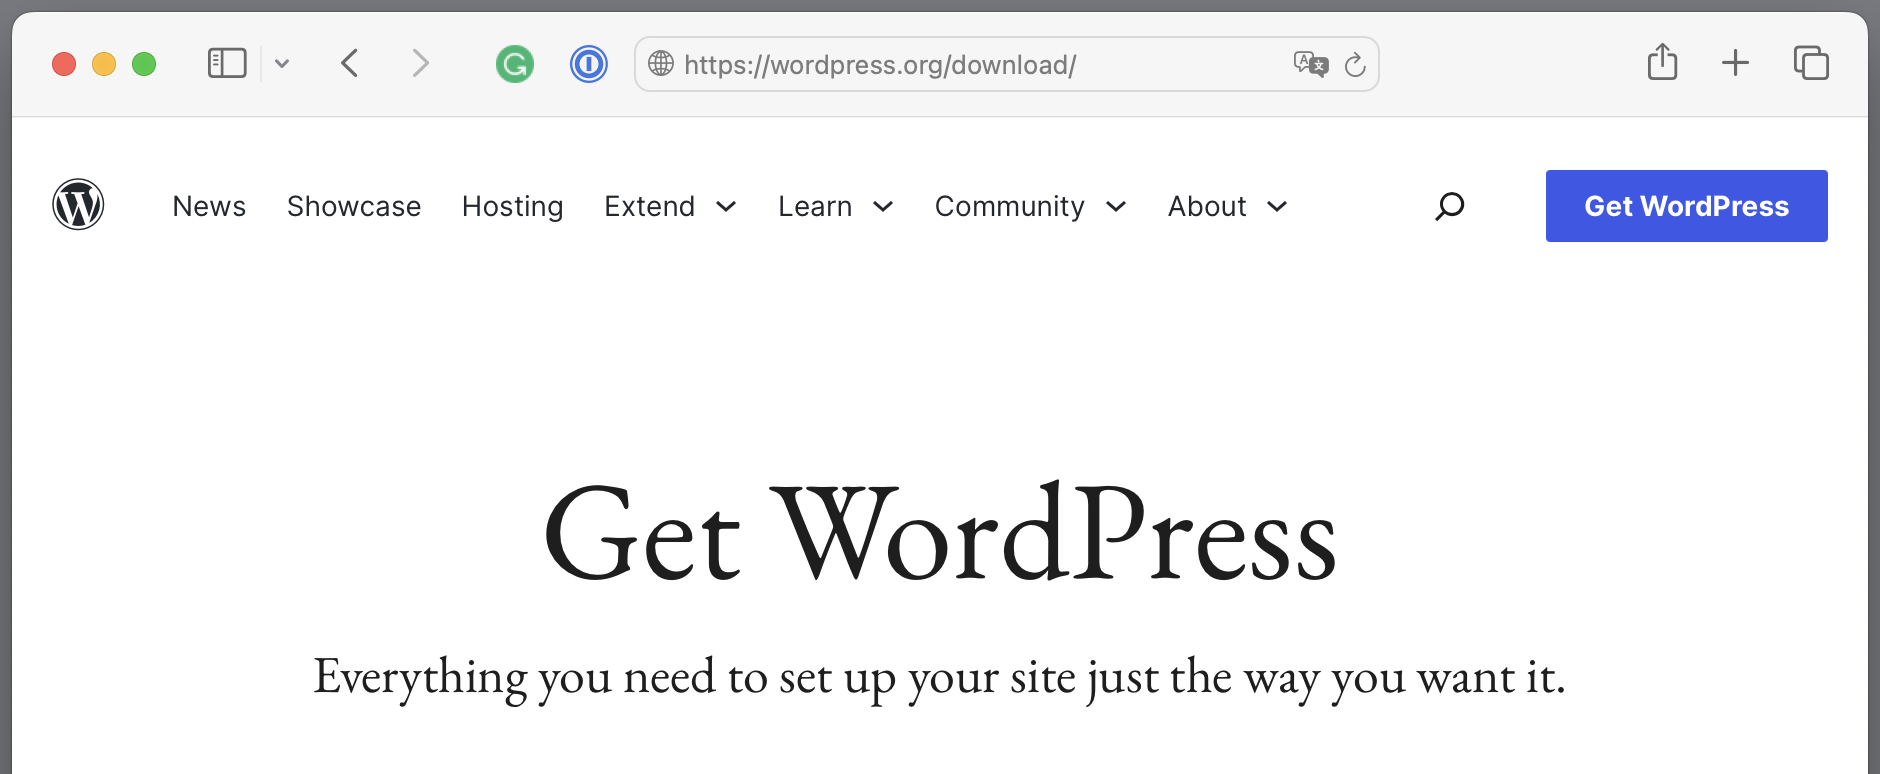 wordpress(dot)org website, download, get wordpress